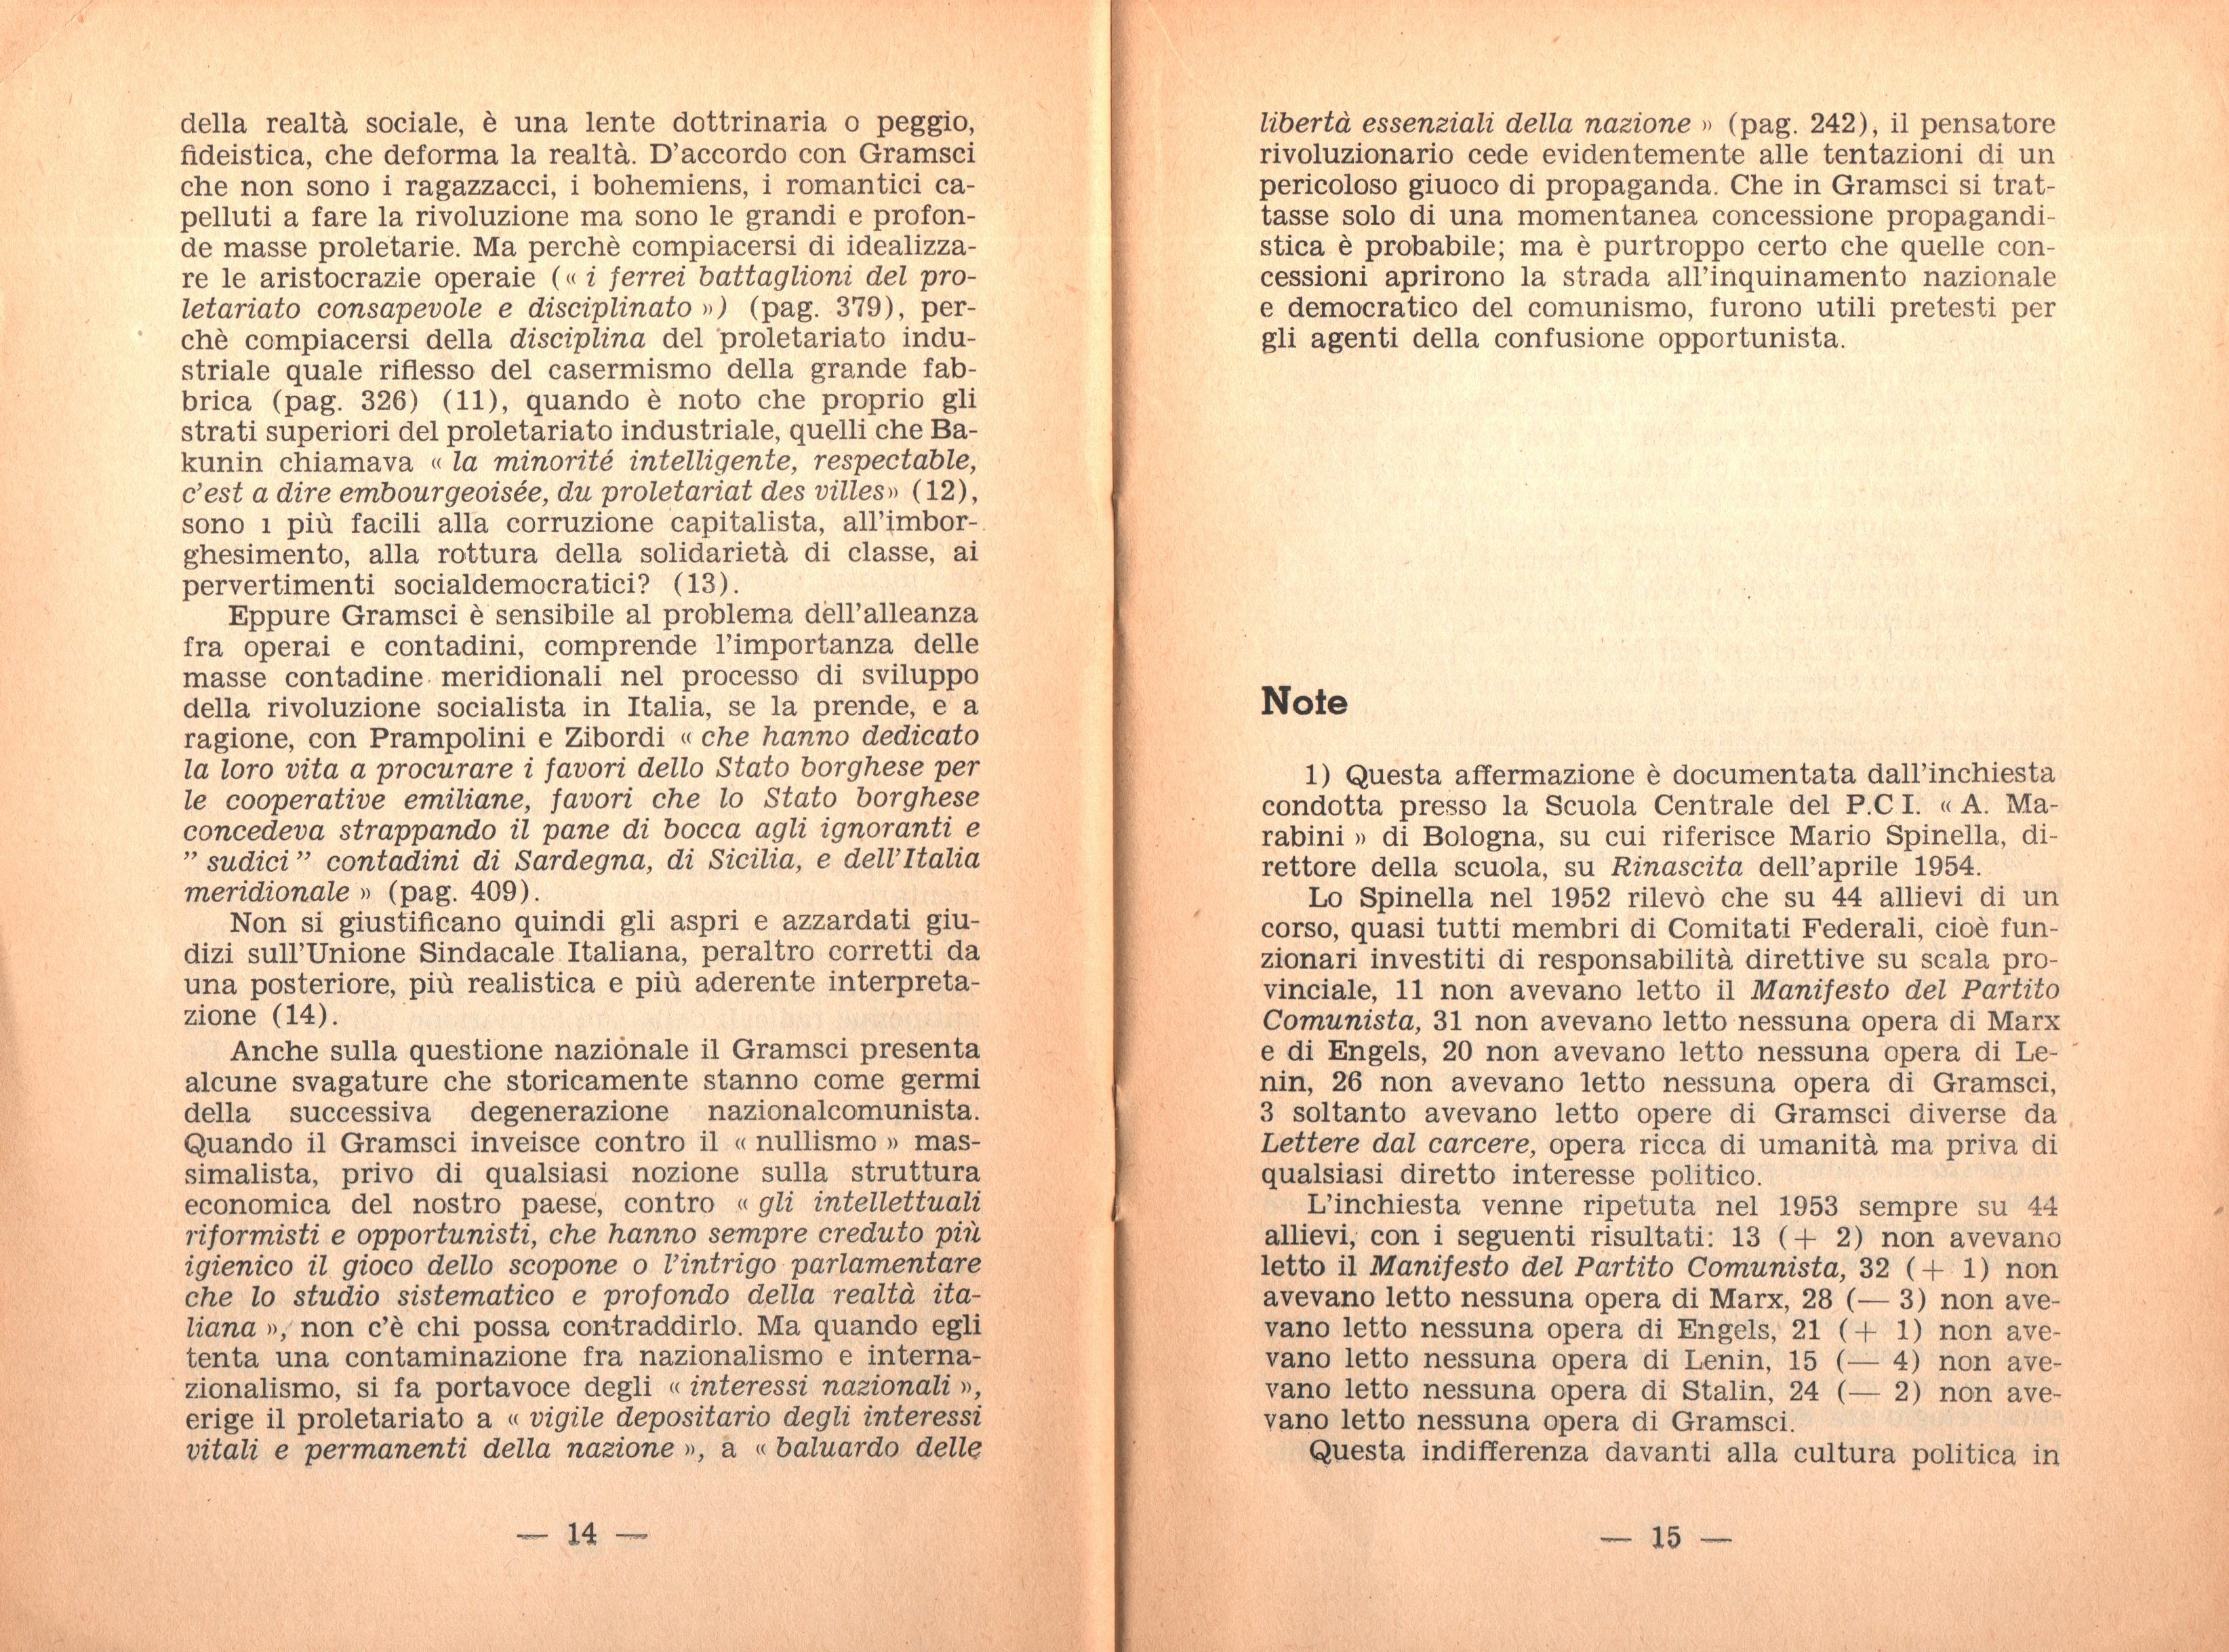 Pier Carlo Masini, Antonio Gramsci - pag. 9